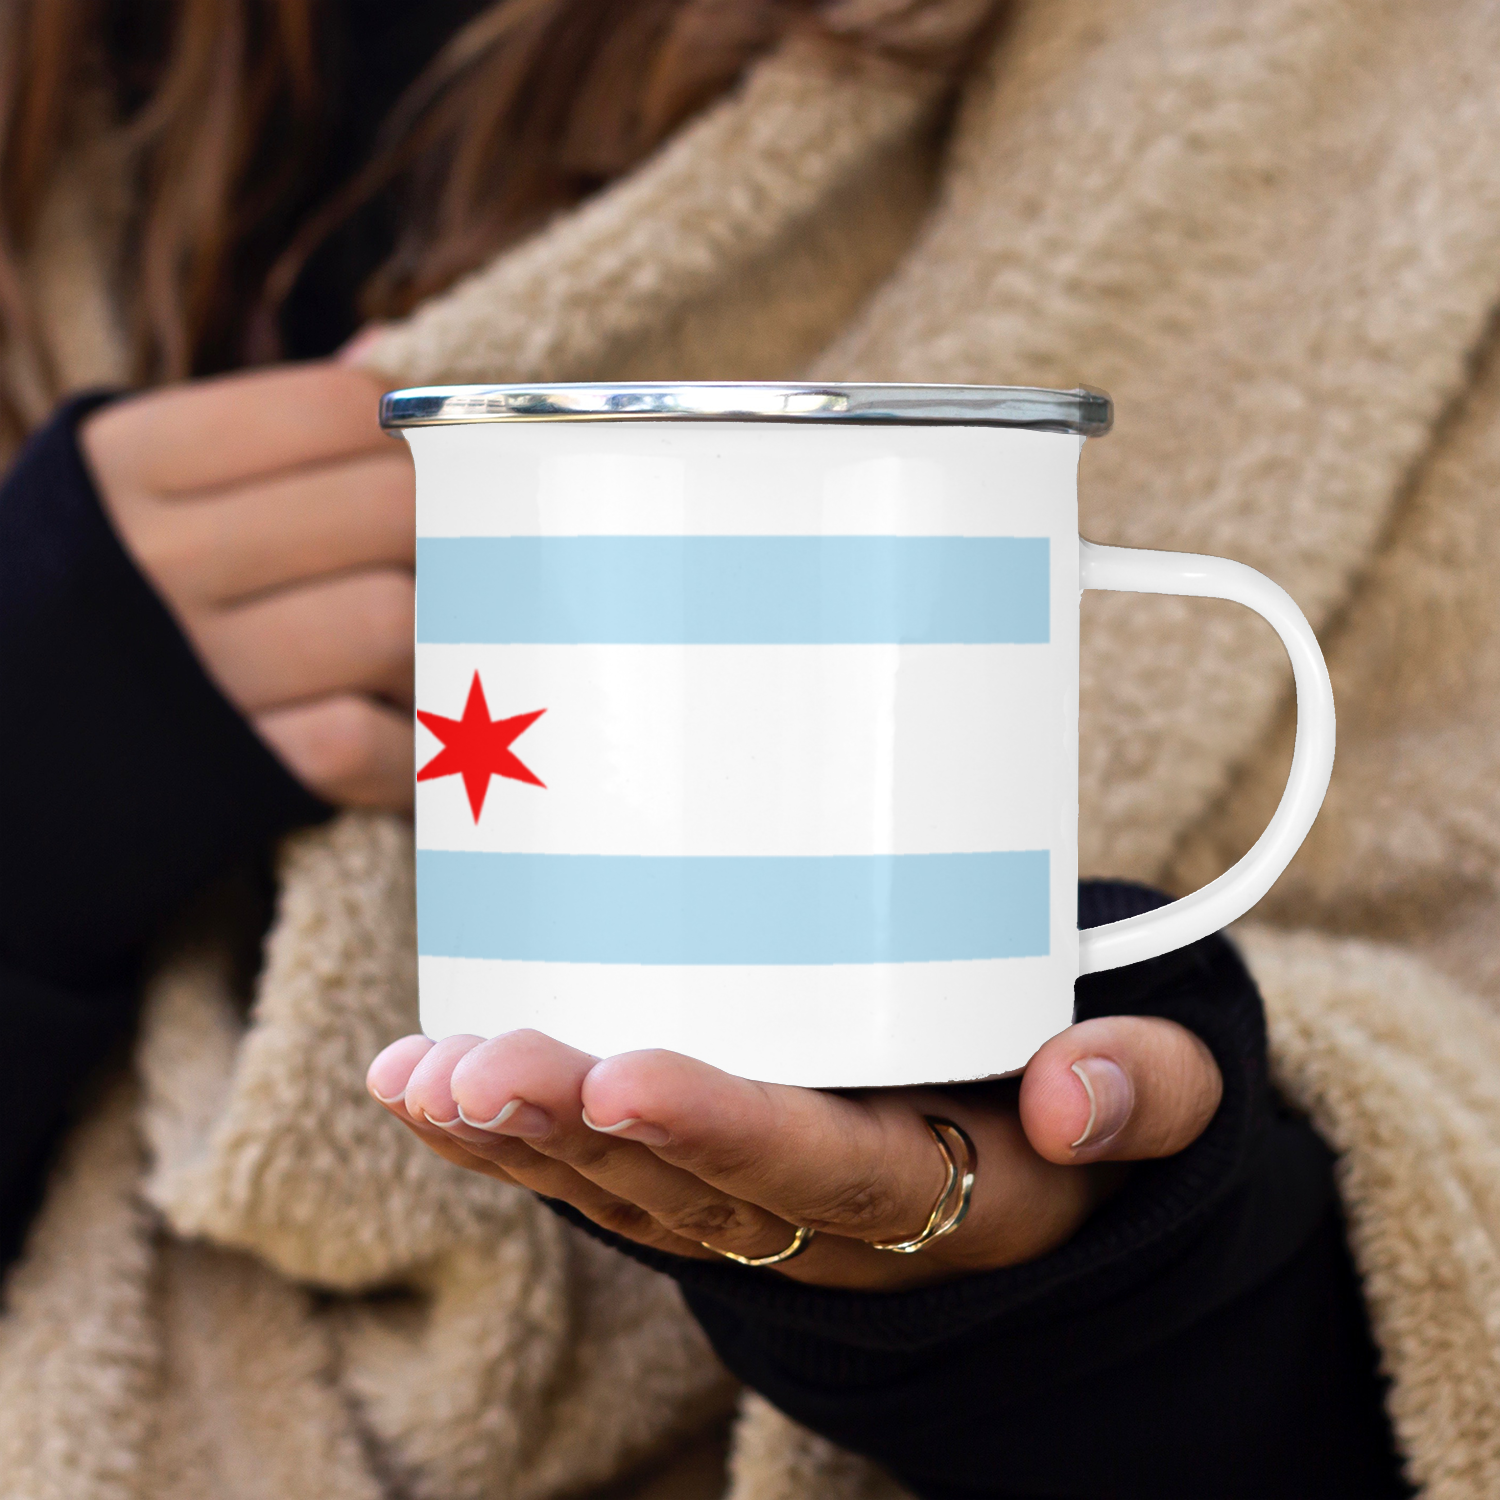 Chicago Flag Enamel Mug